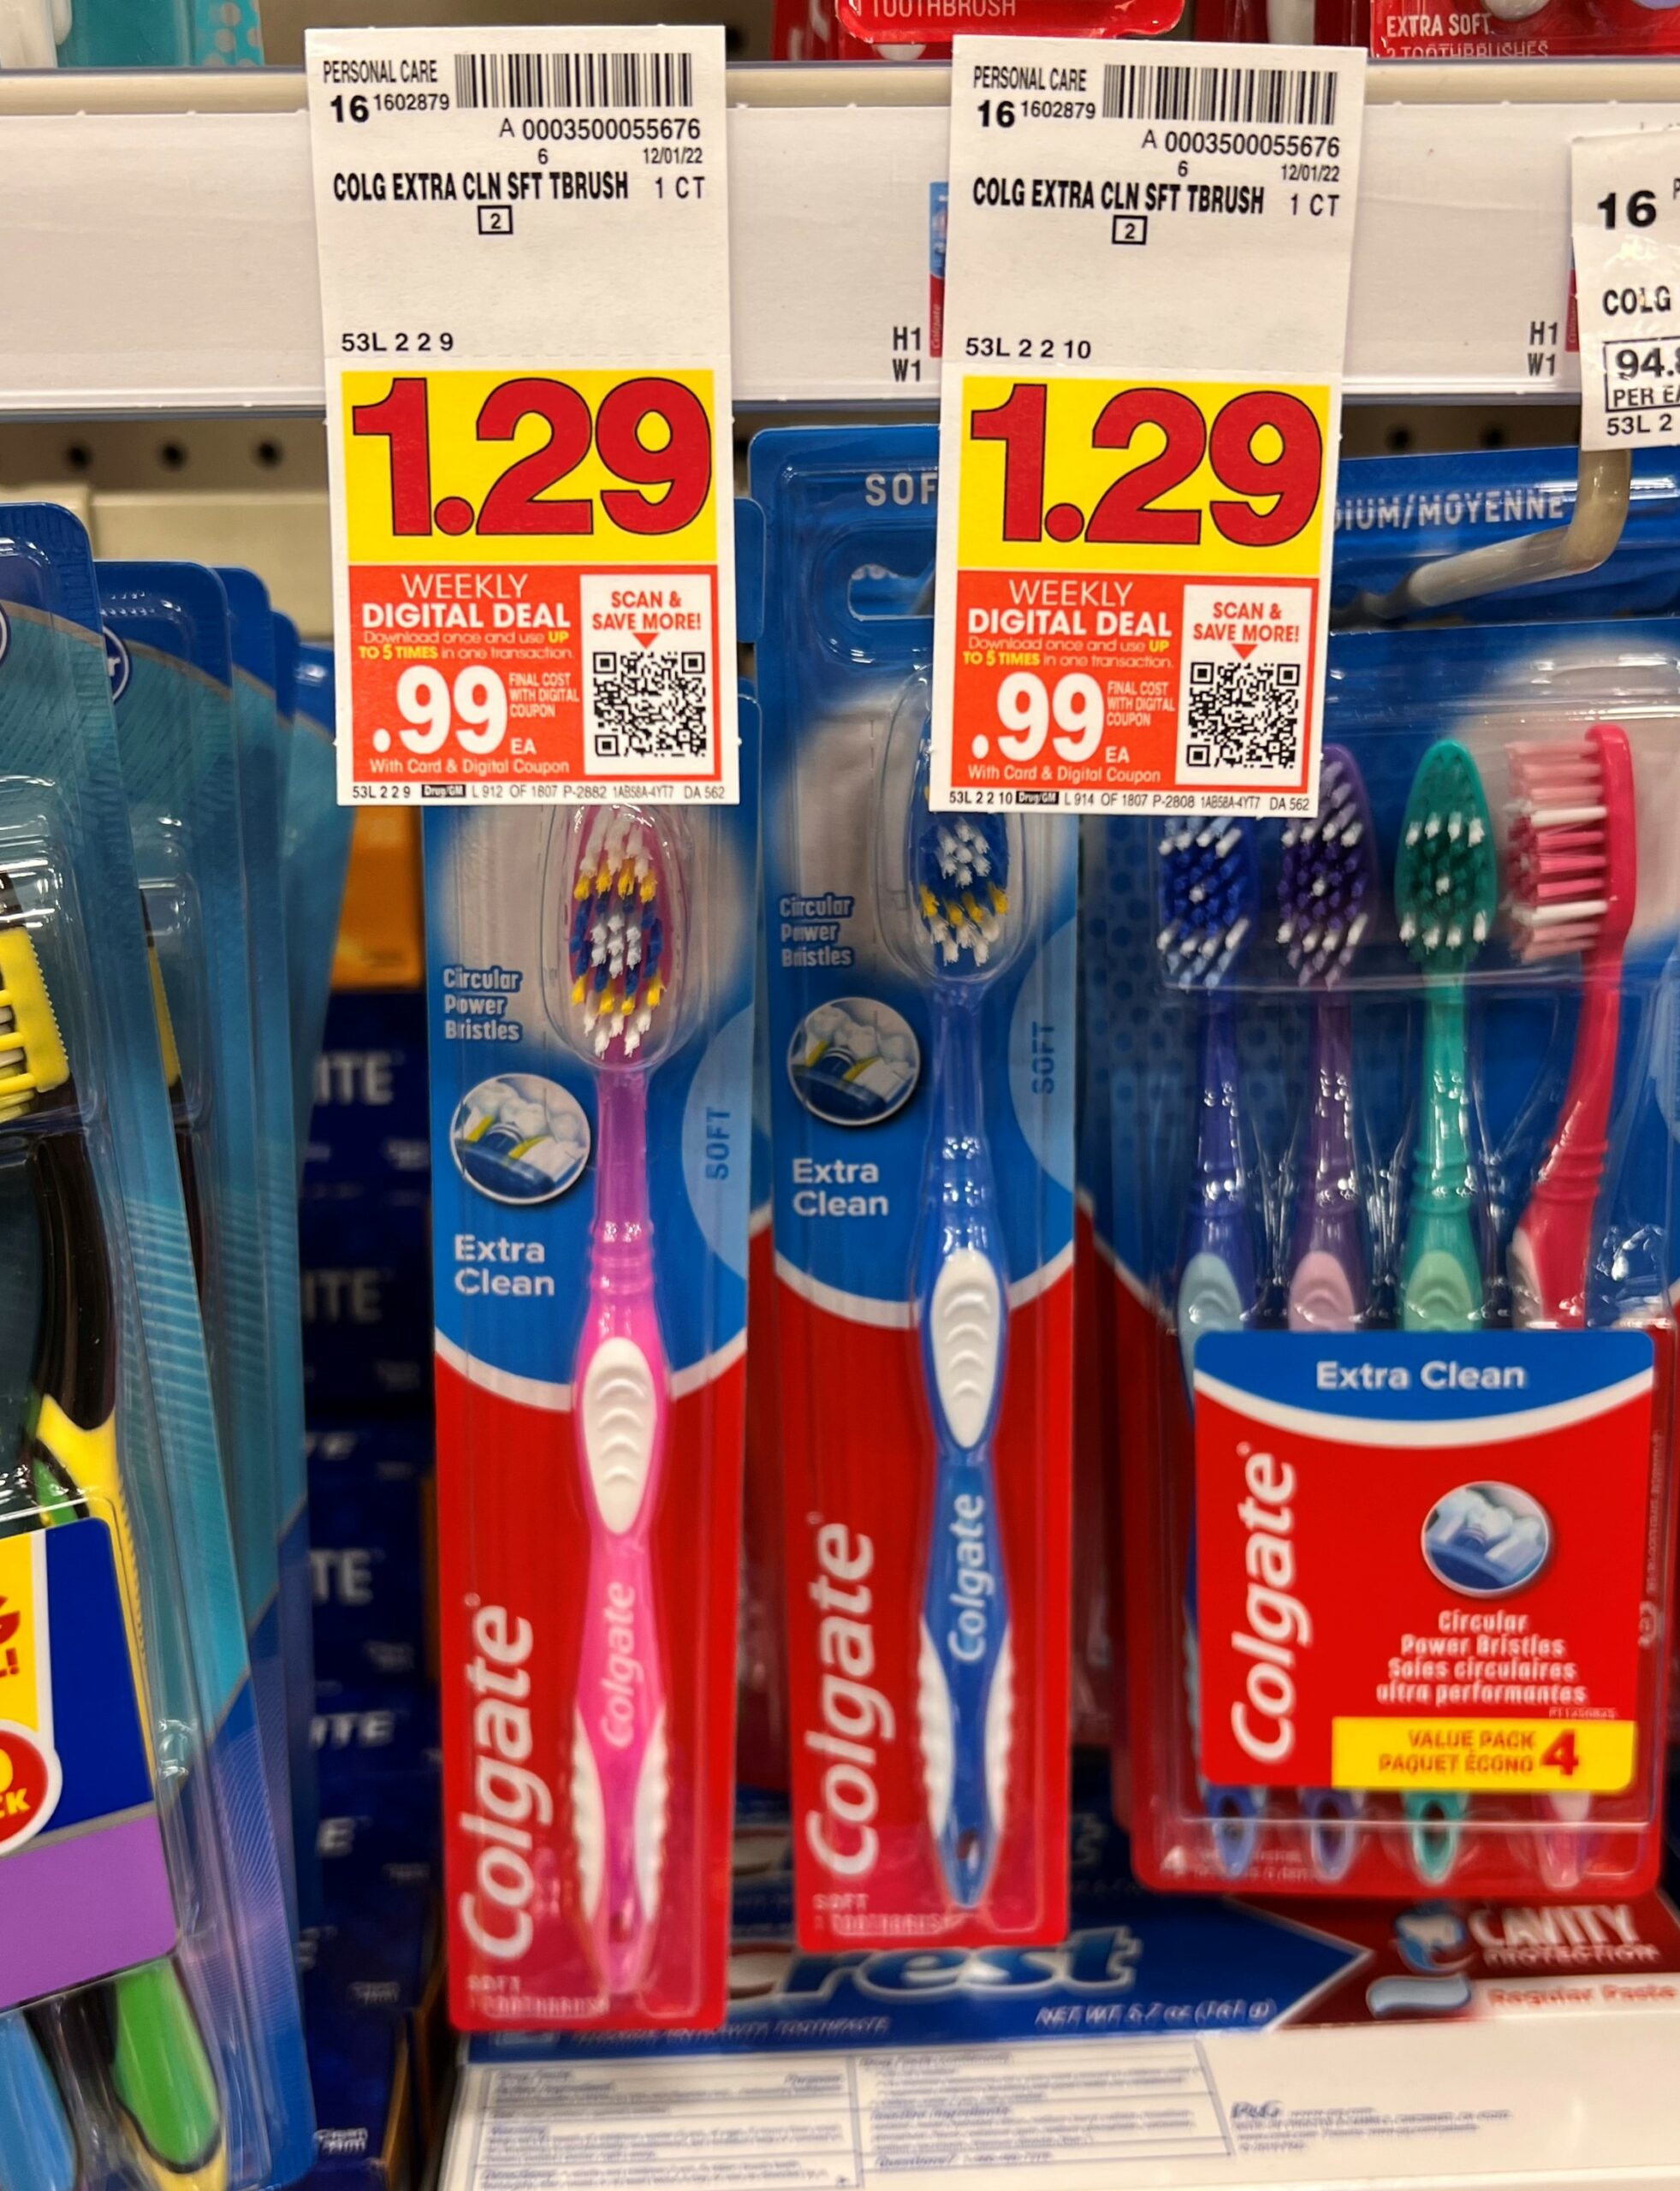 colgate toothbrush kroger shelf image 